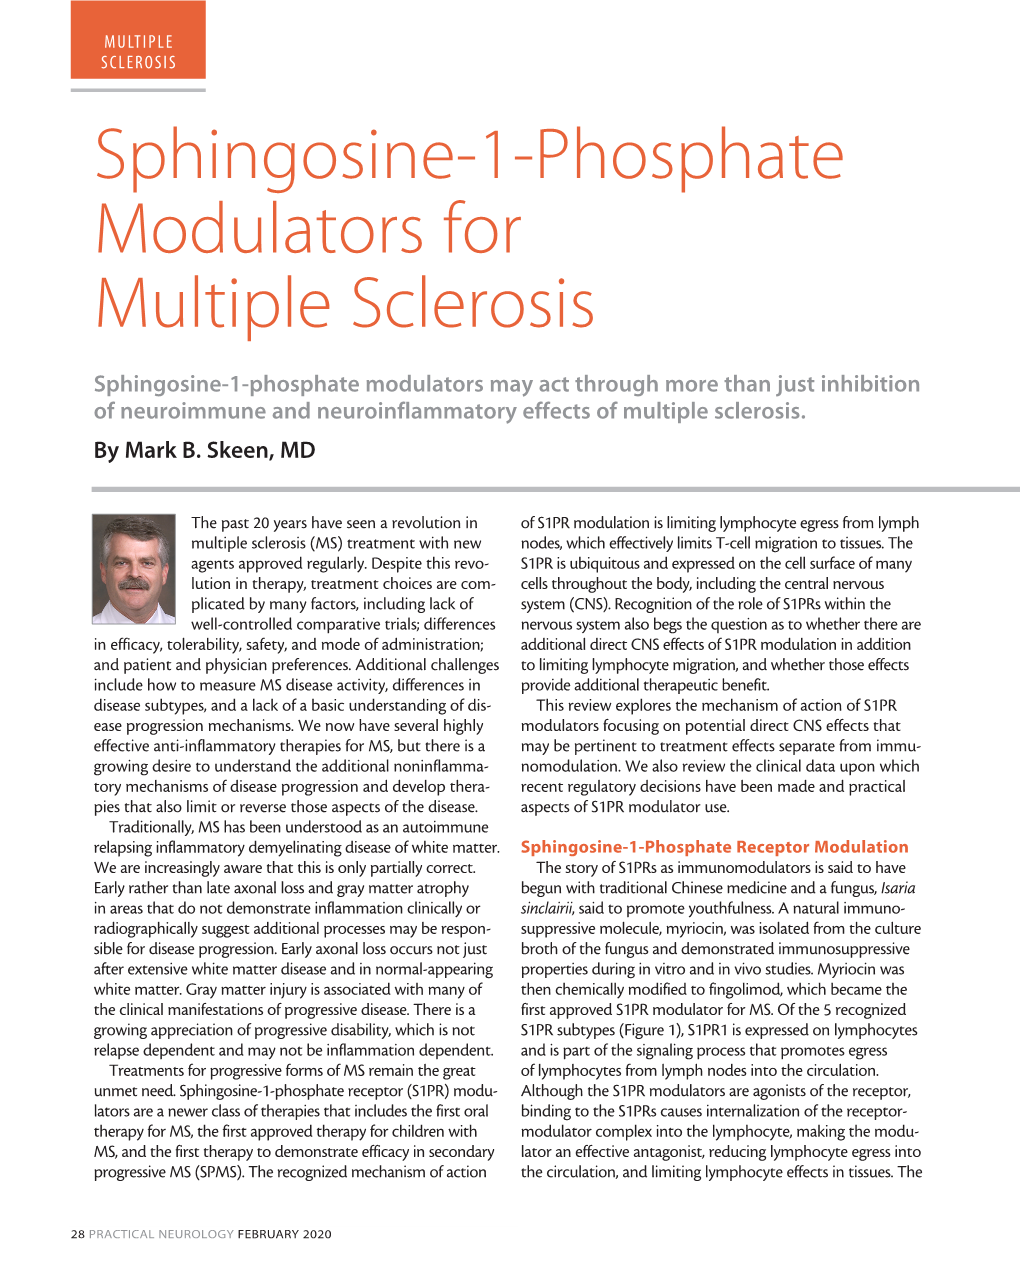 Sphingosine-1-Phosphate Modulators for Multiple Sclerosis